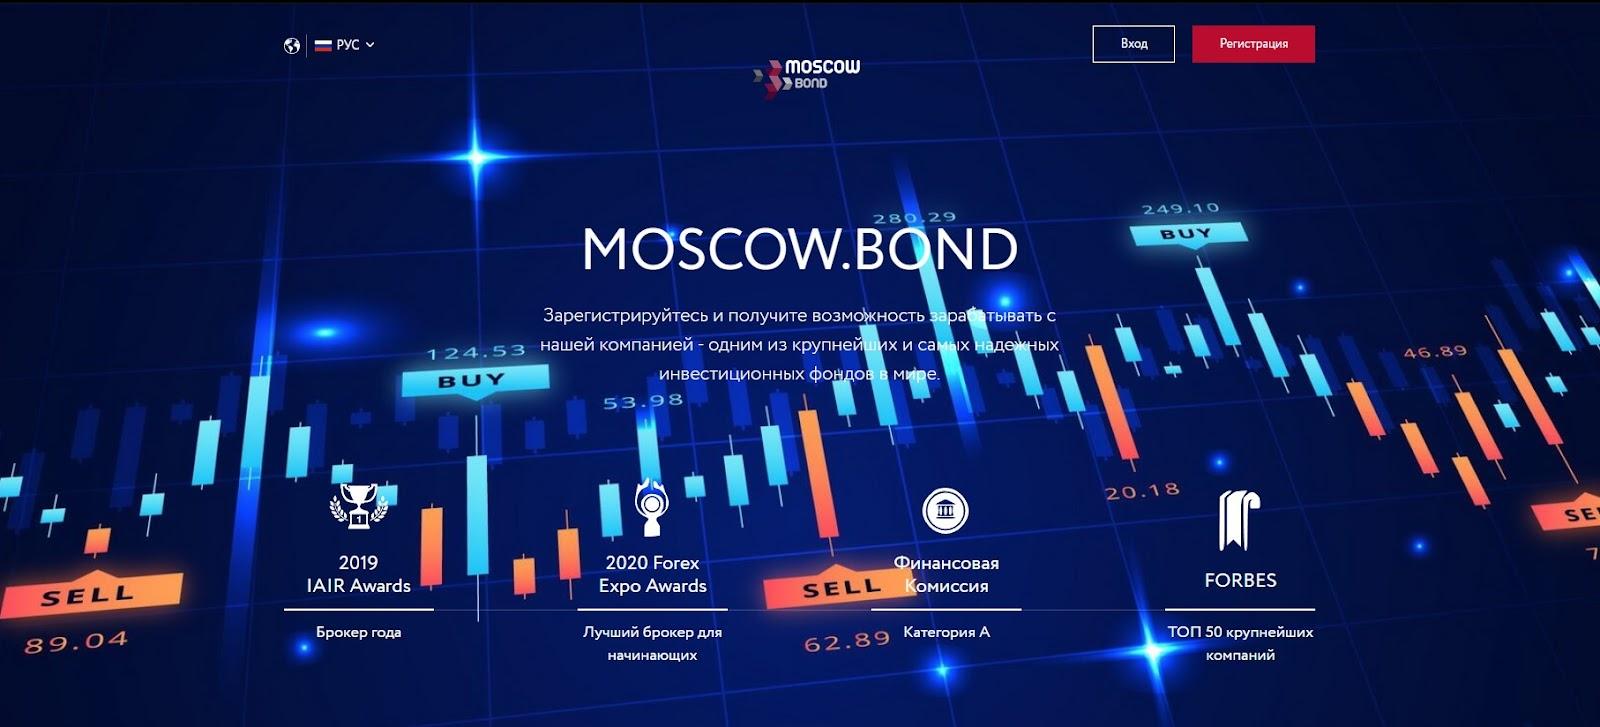 Moscow.Bond официальный сайт